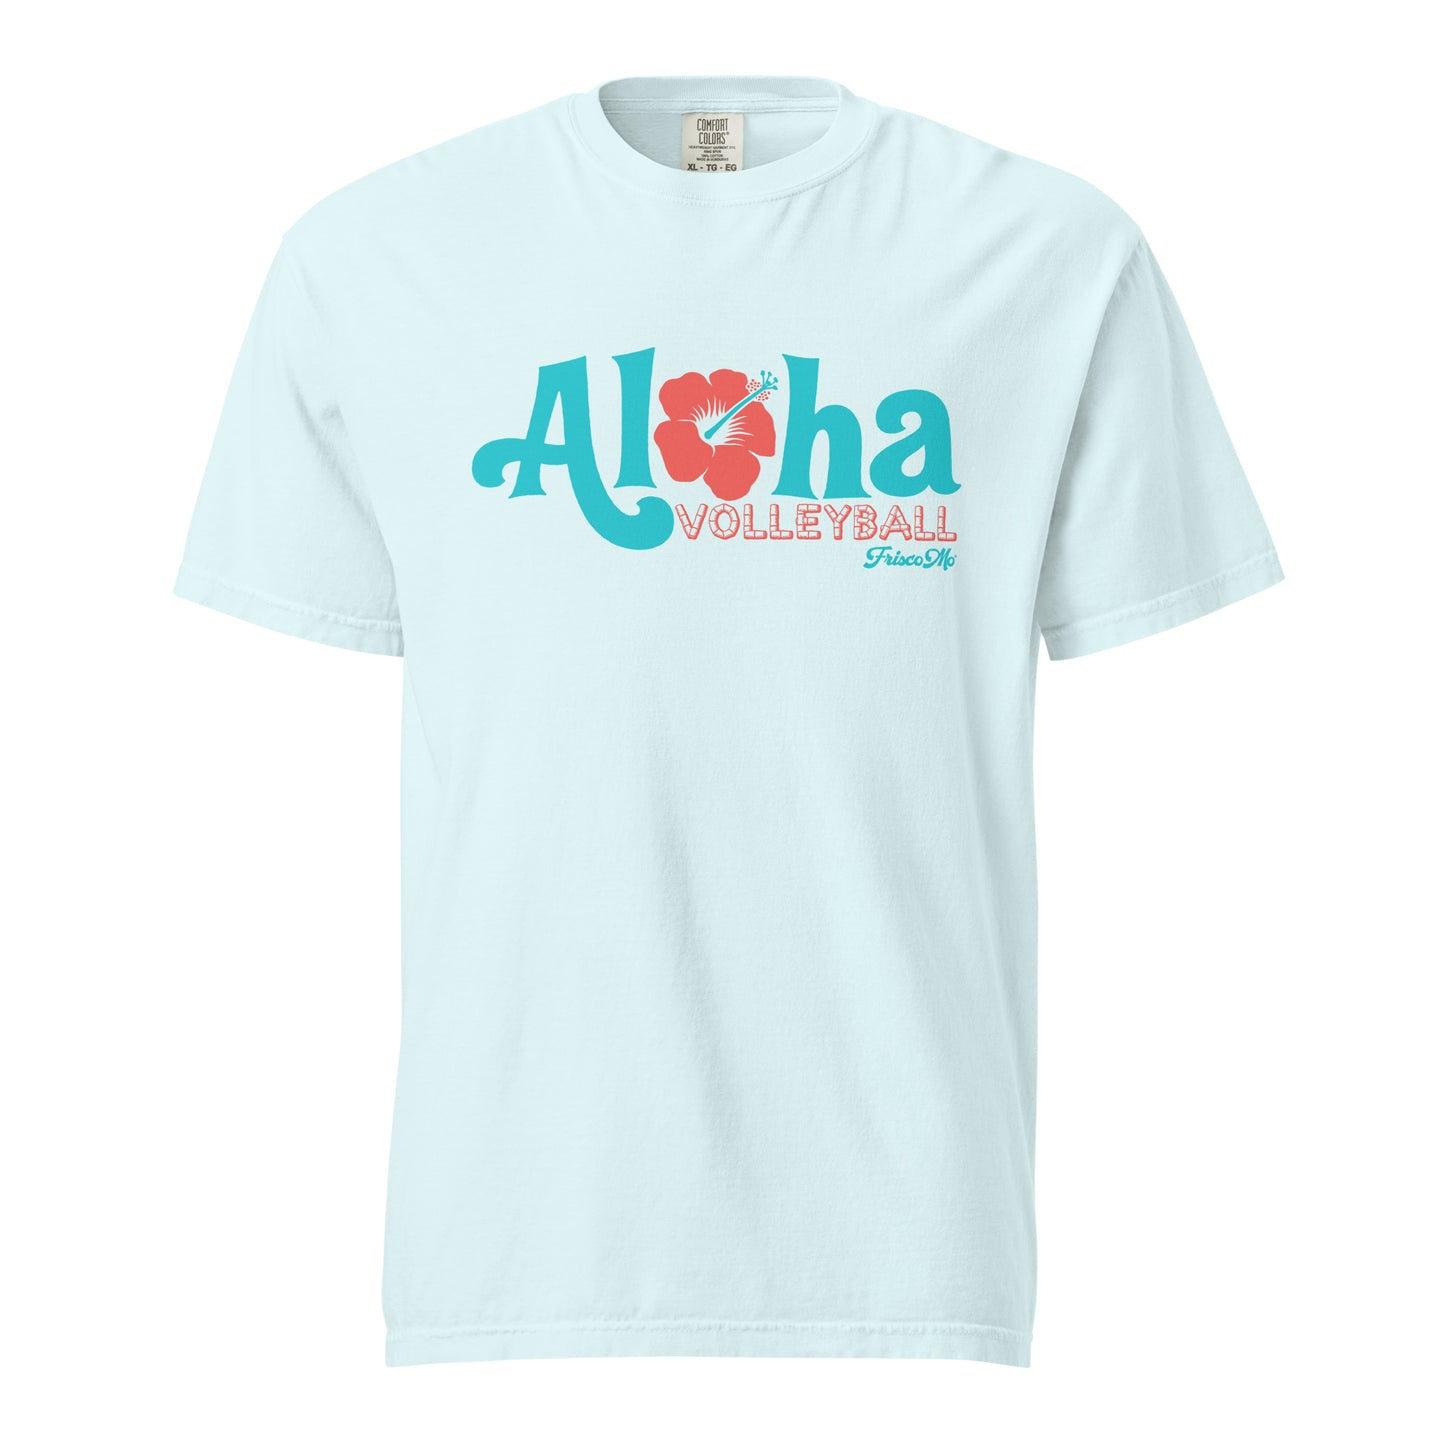 Aloha Garment-Dyed Tee